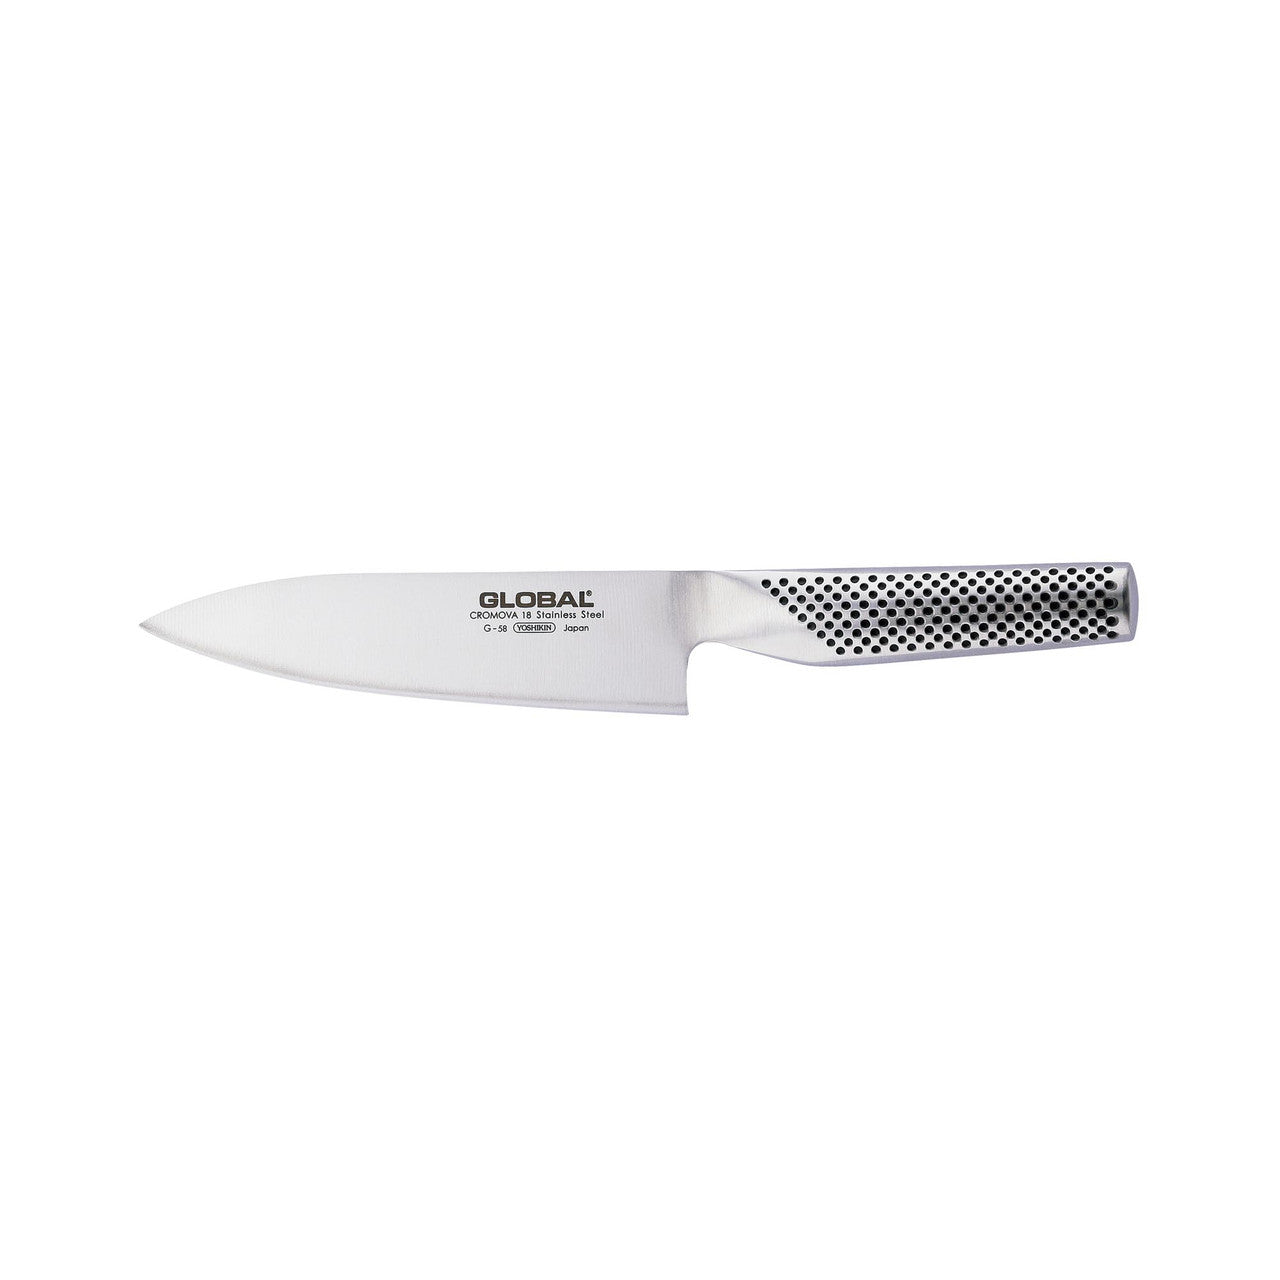 Global Classic 16cm Cooks Knife G-58